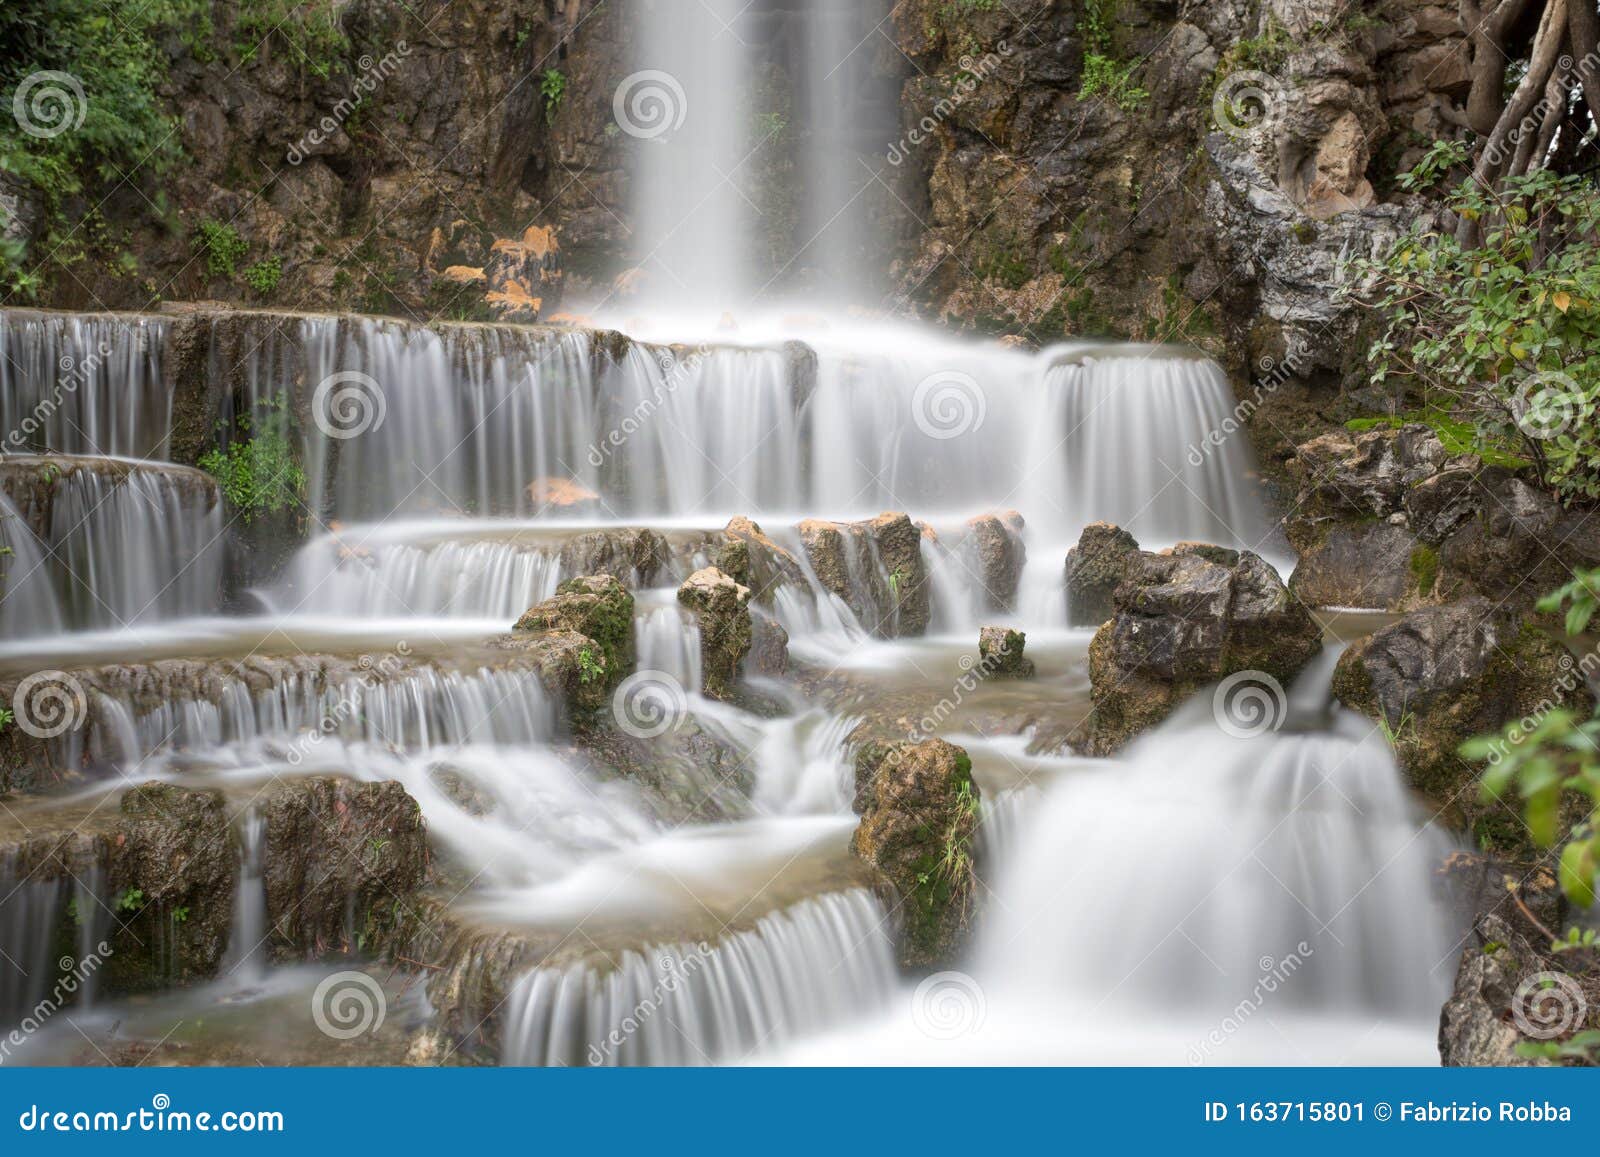 waterfall in villetta di negro park in the city of genoa, italy